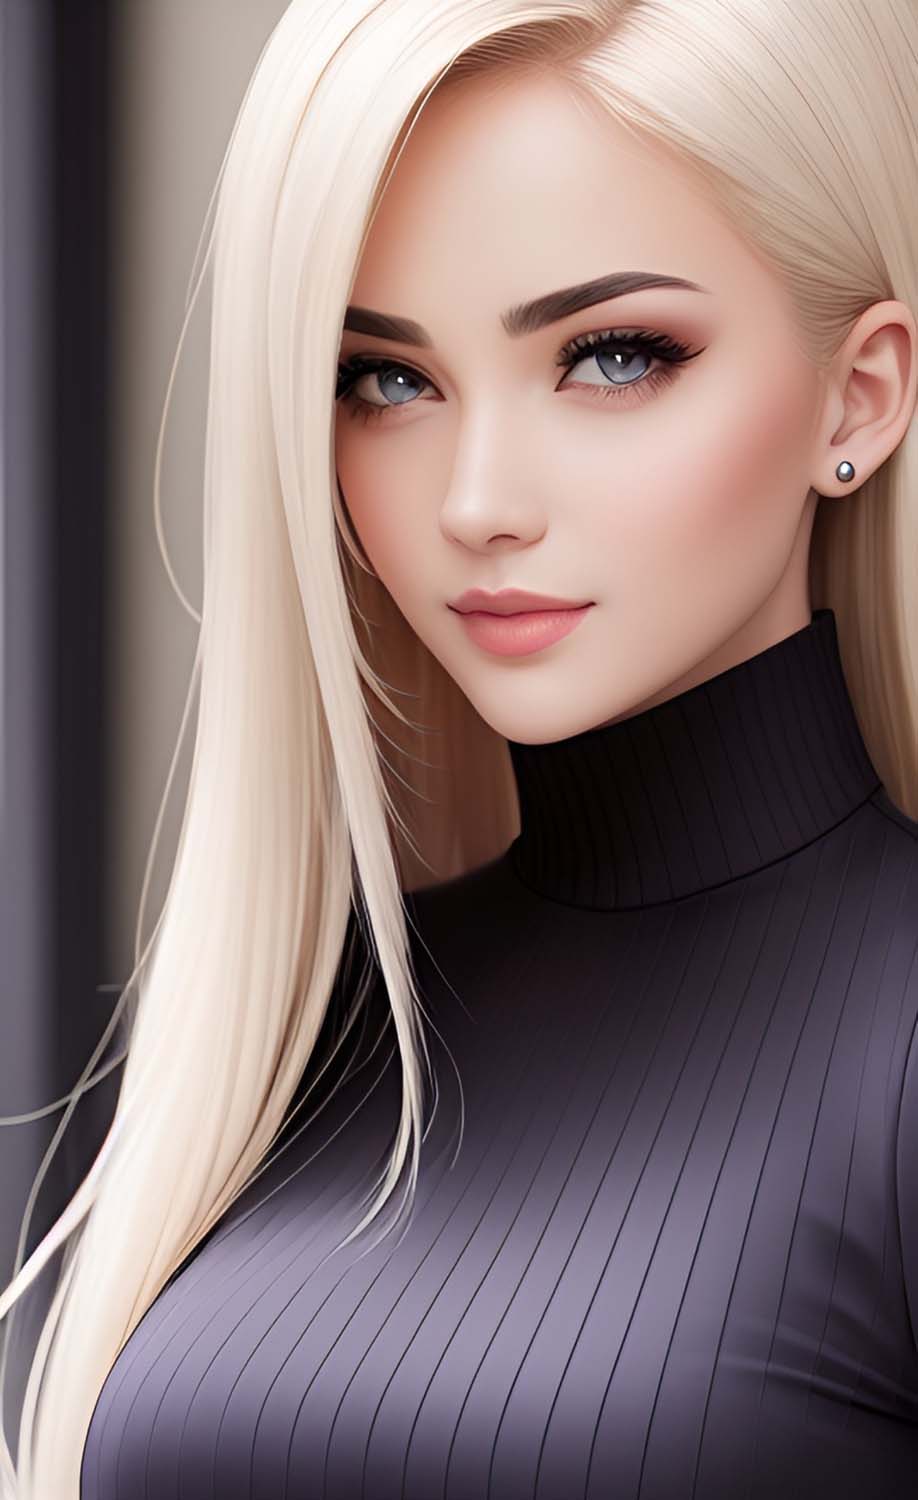 Blonde Girl iPhone Wallpaper HD